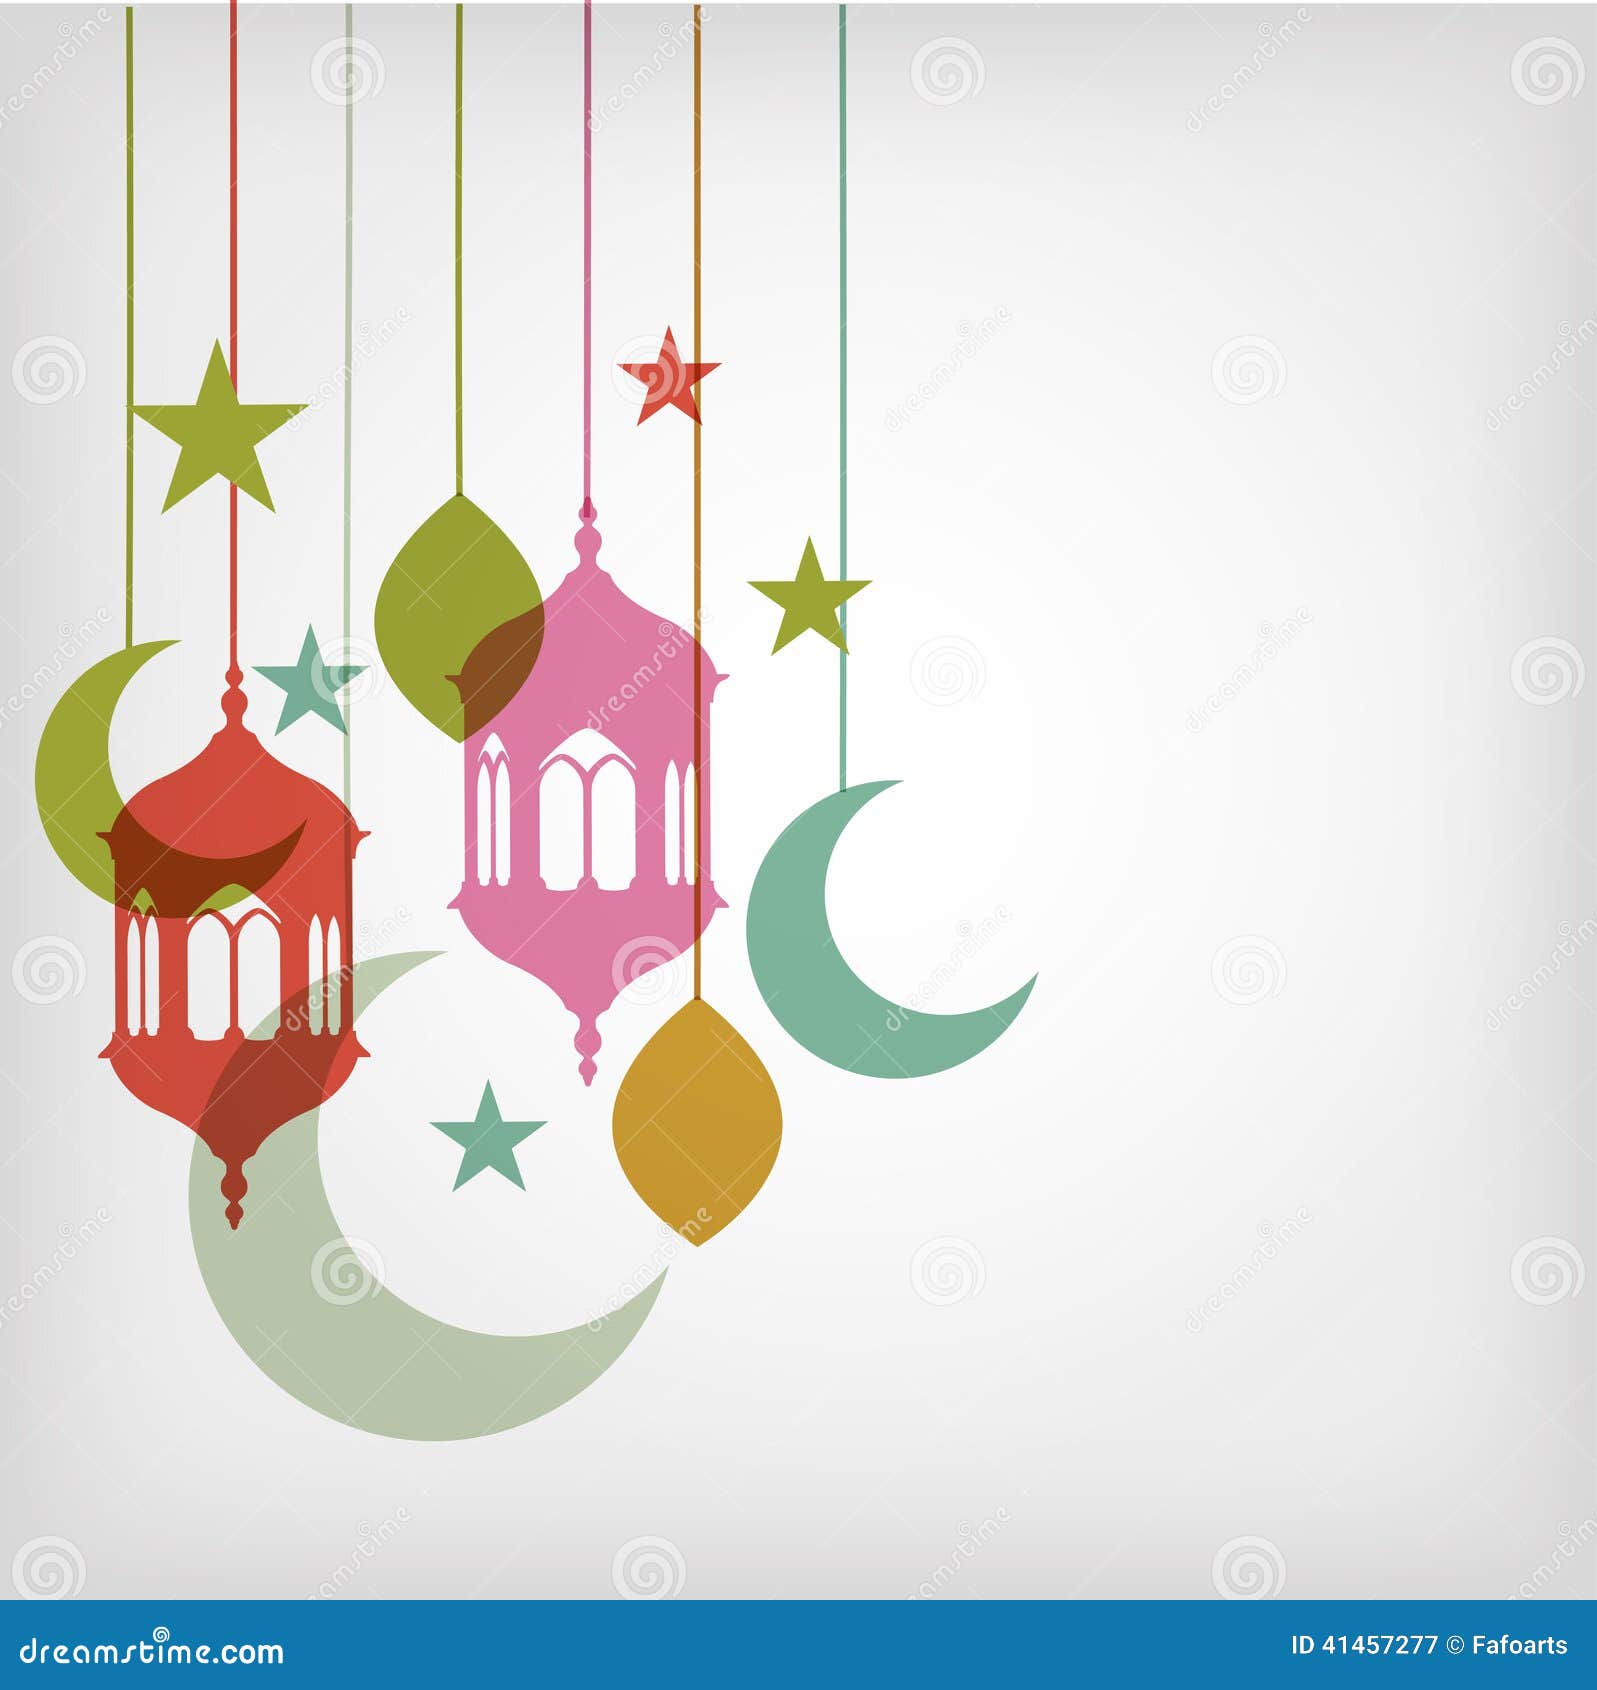 Ramadan greeting card stock illustration. Illustration of 